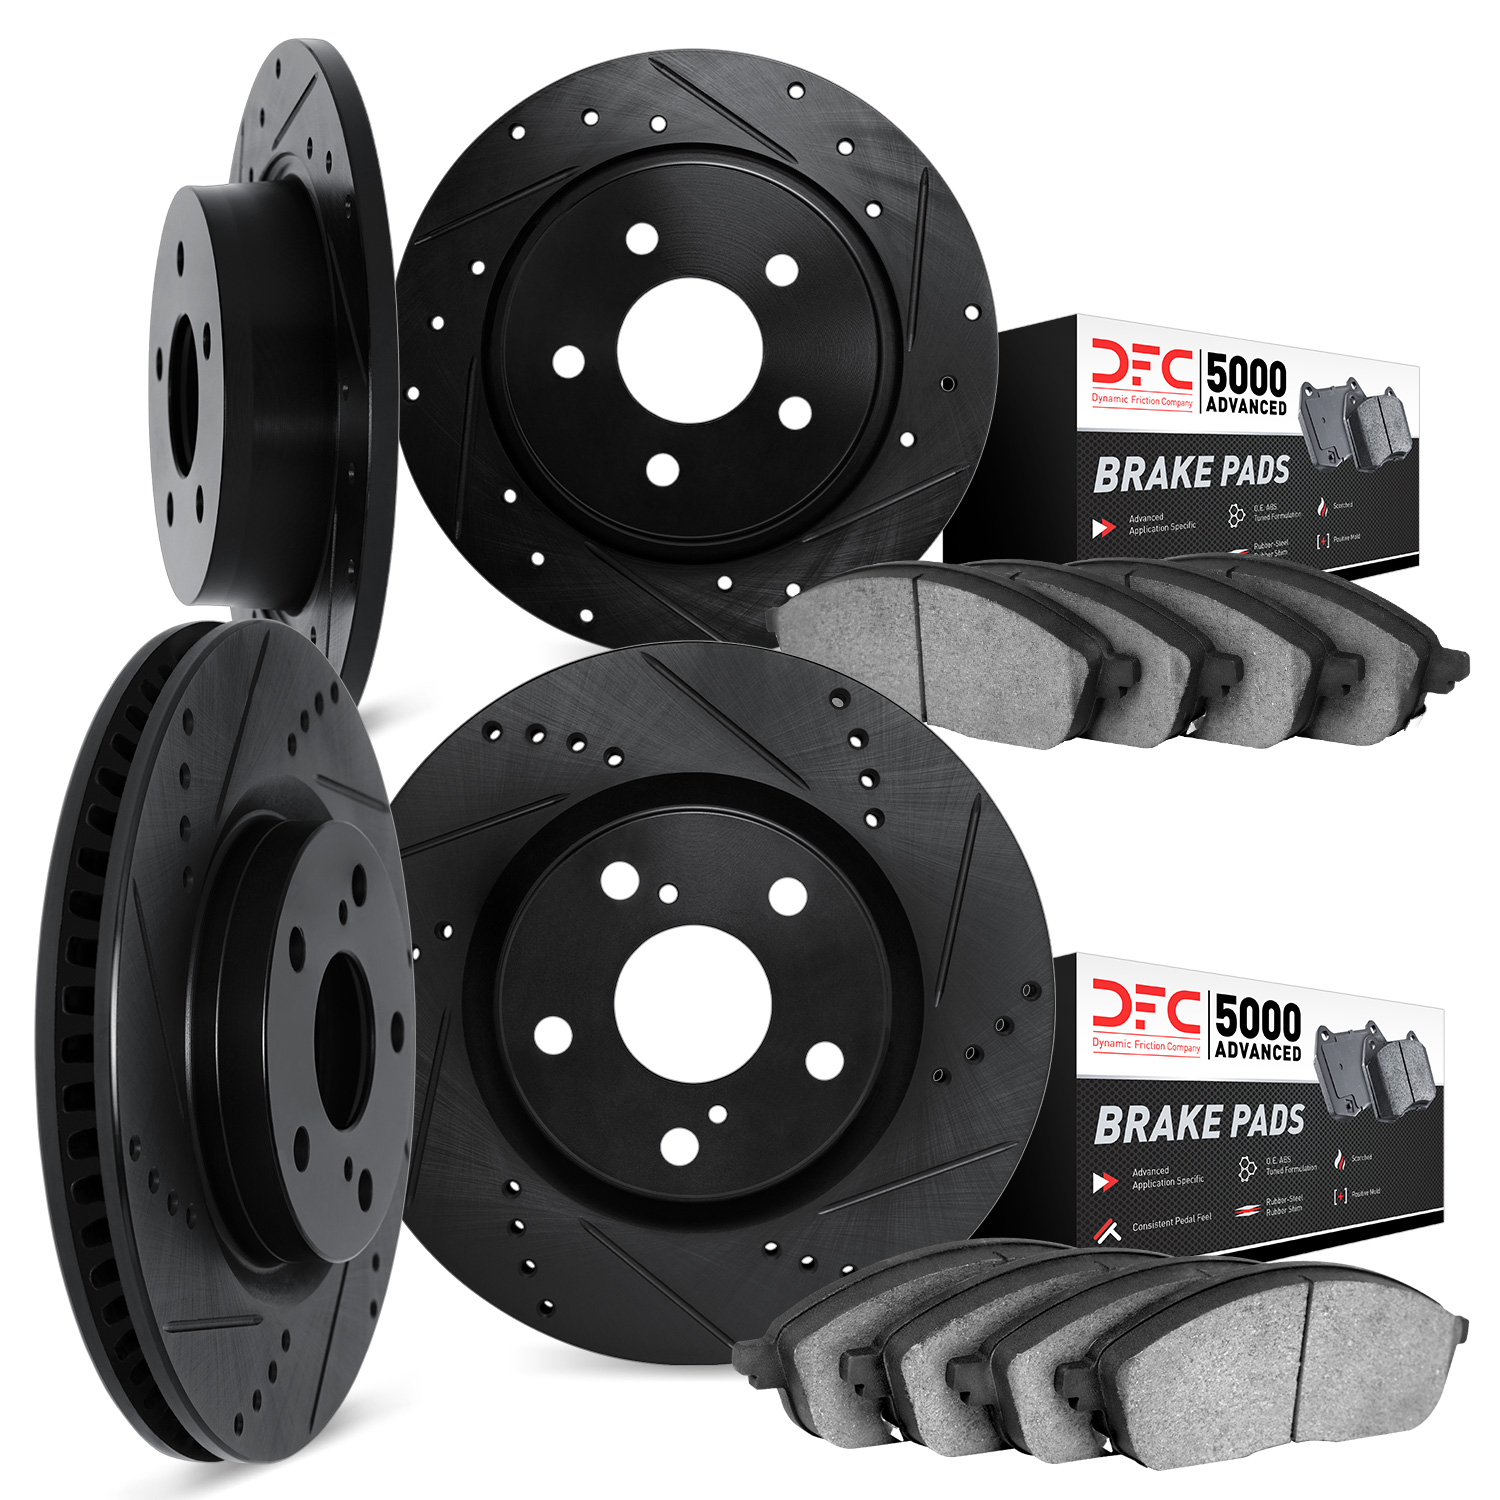 8504-42049 Drilled/Slotted Brake Rotors w/5000 Advanced Brake Pads Kit [Black], 2005-2010 Mopar, Position: Front and Rear